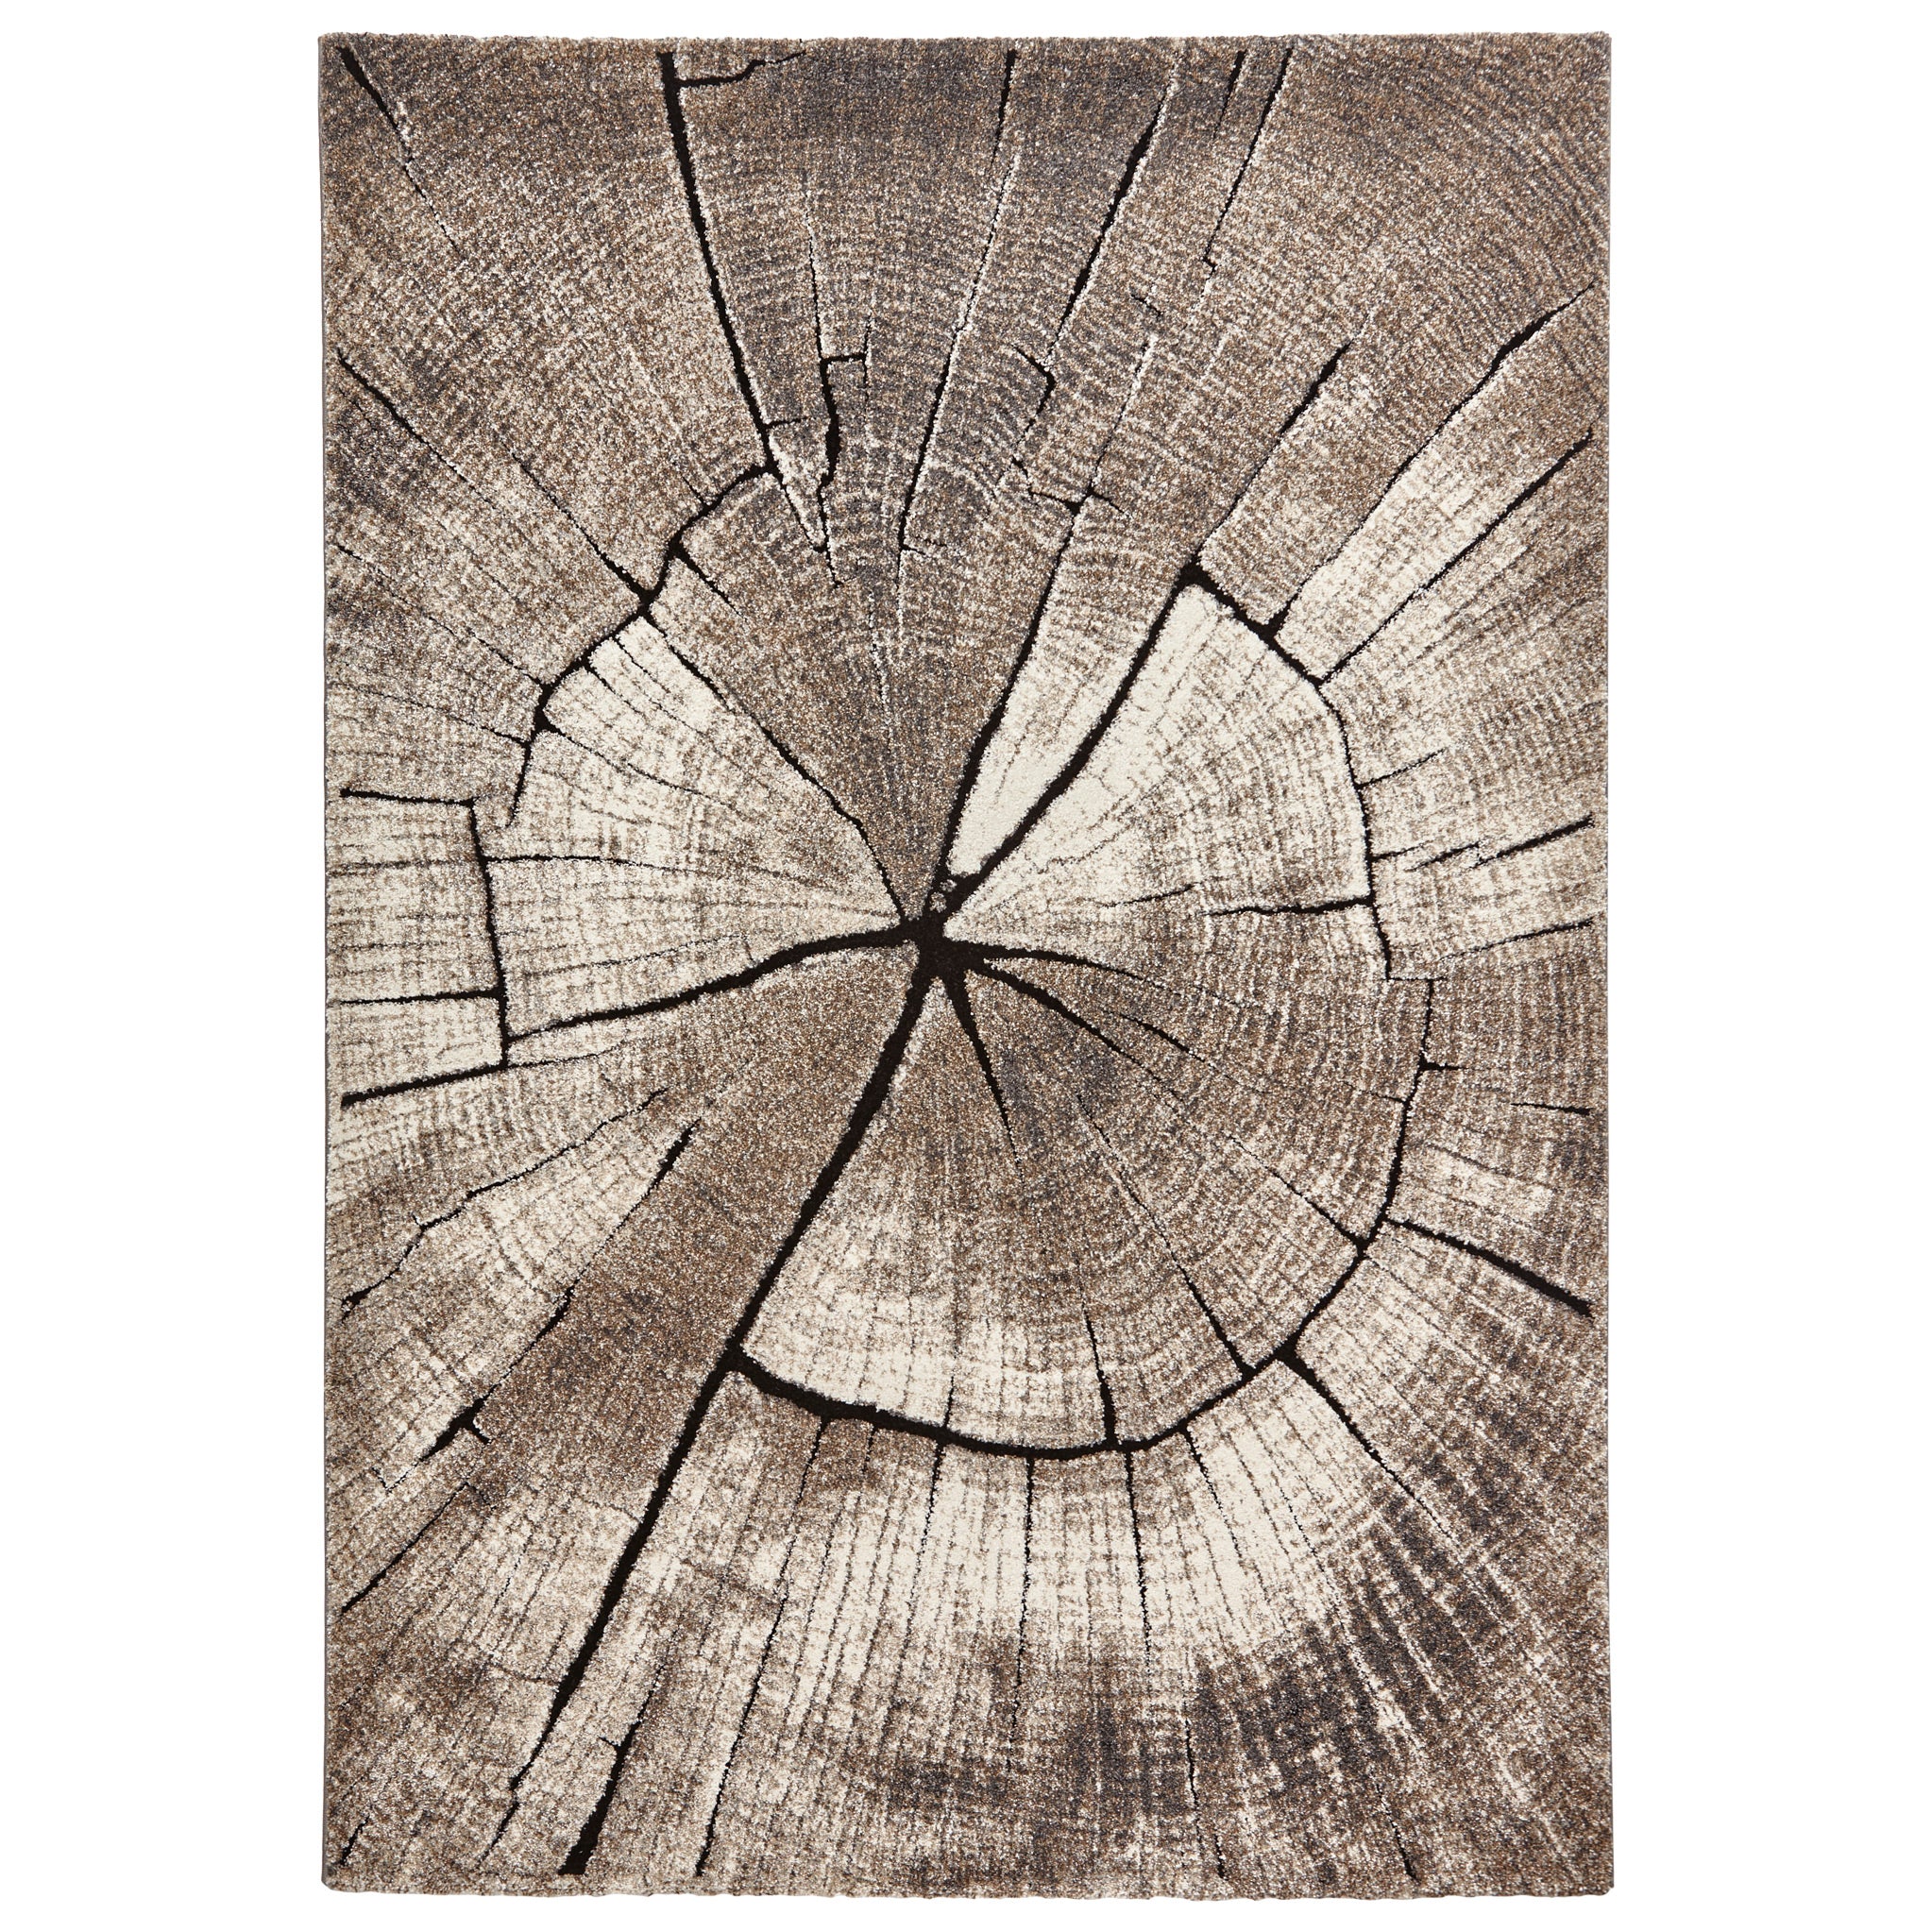 Woodland Tree Patterned Rectangular Rug For Living Room Or Bedroom